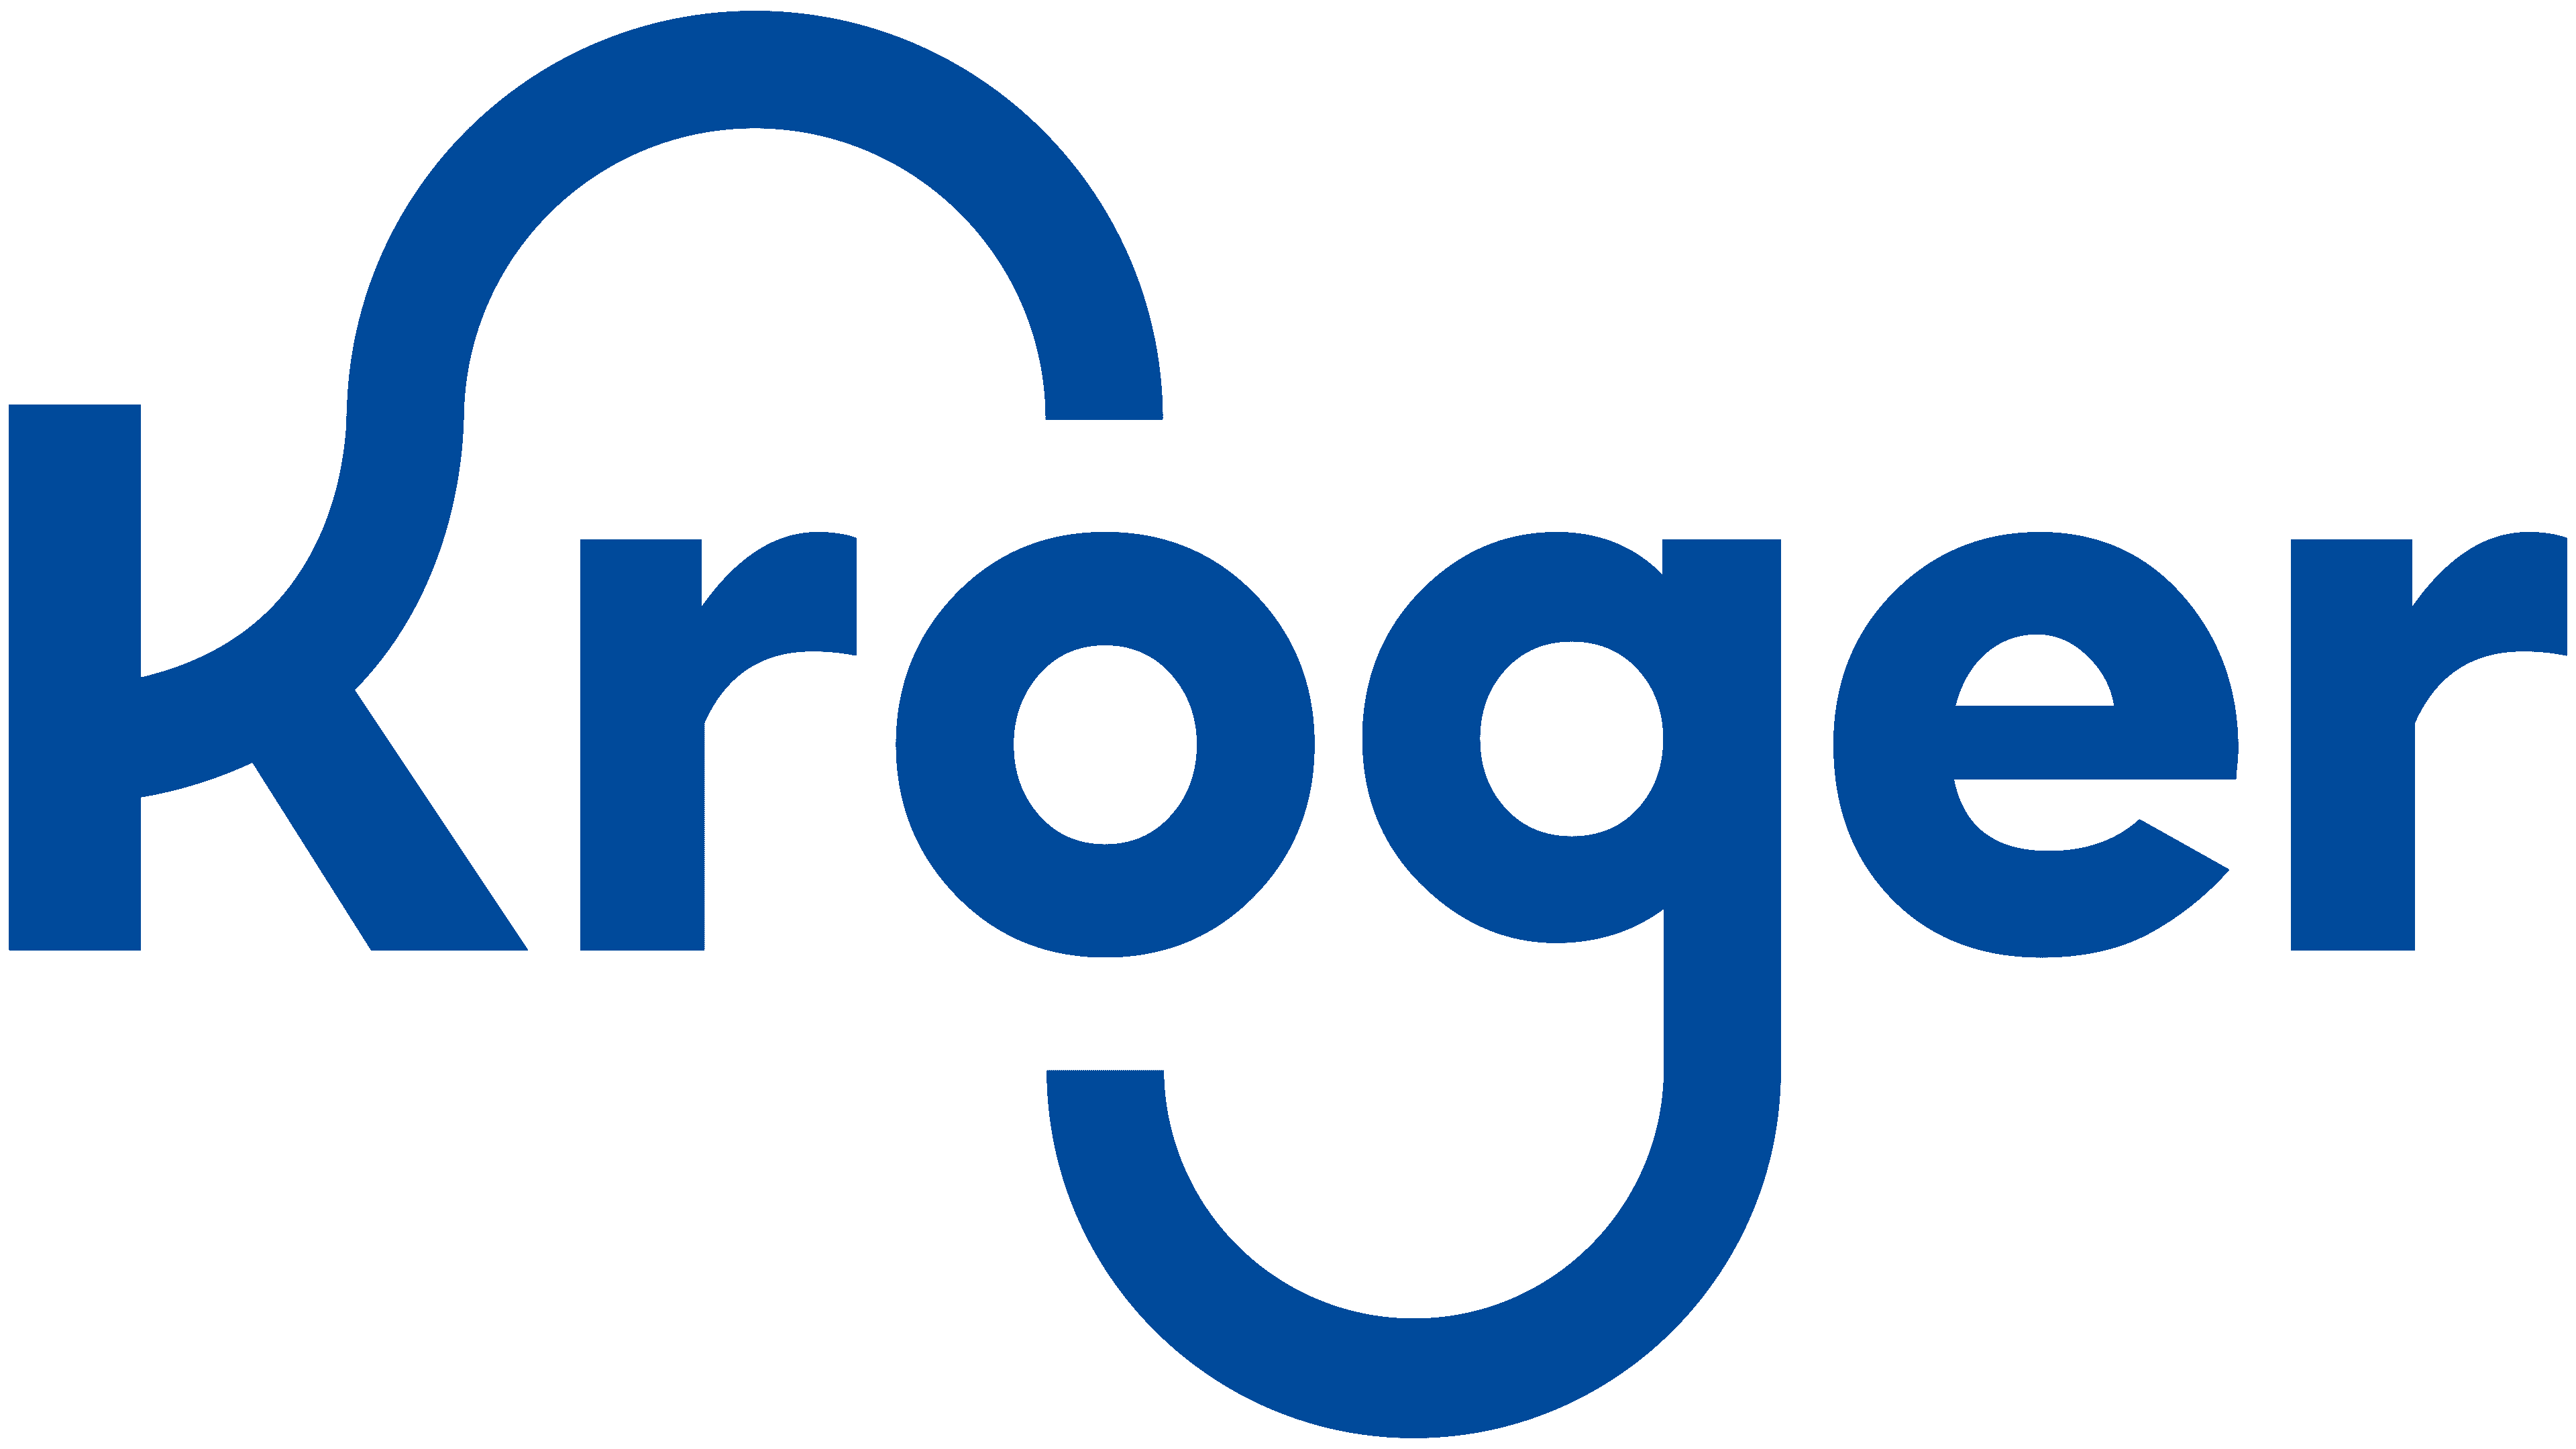 Logotipo da Kroger